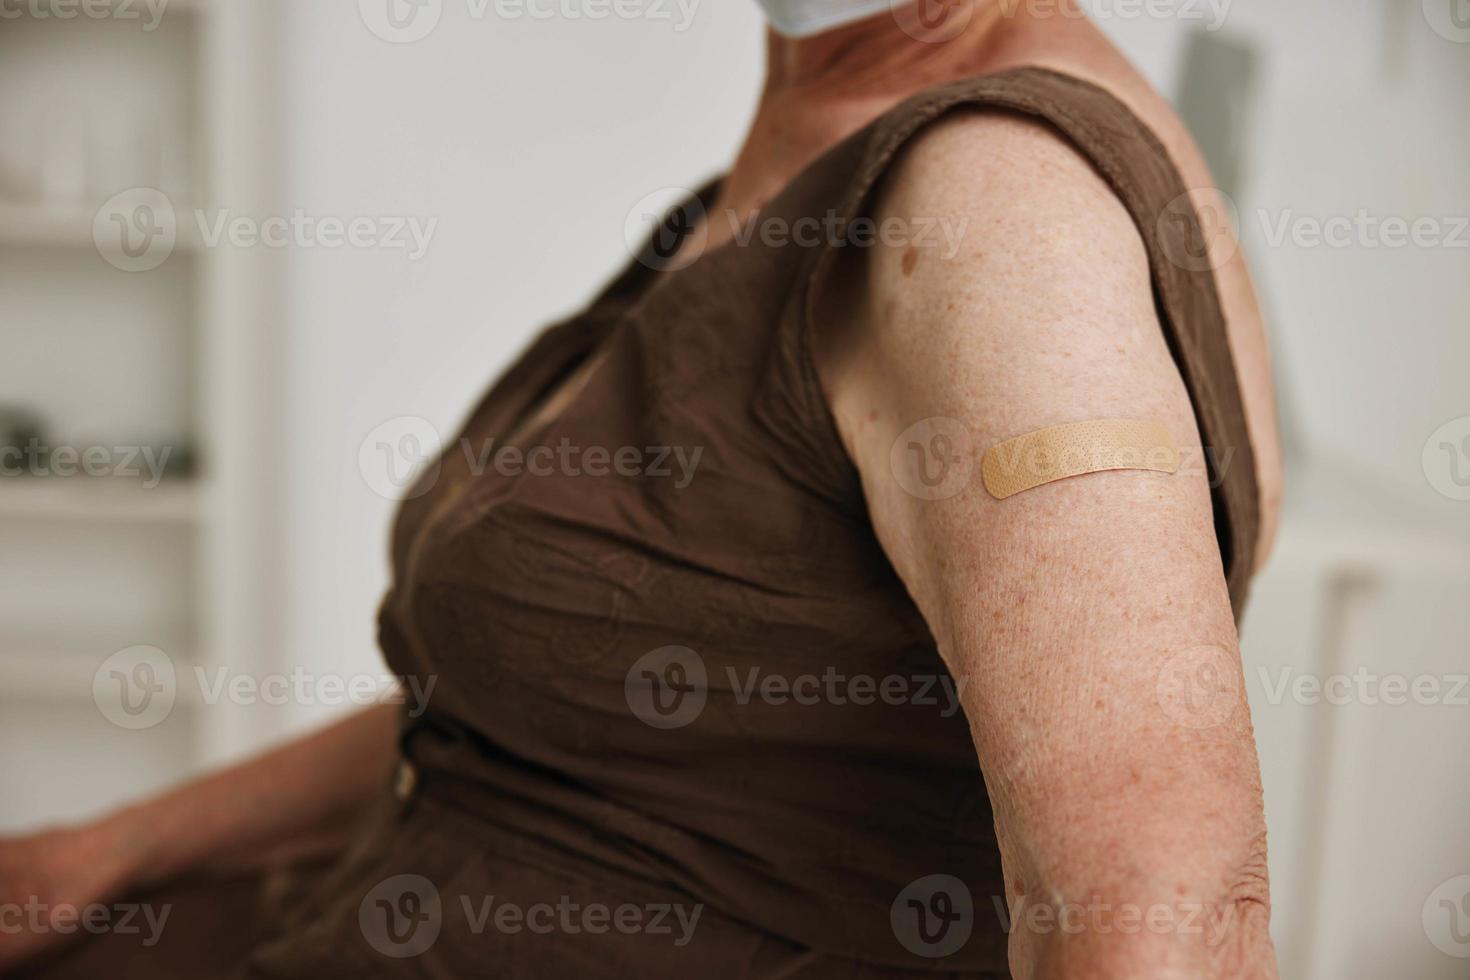 gammal kvinna i klinik vaccin pass covid-19 närbild foto